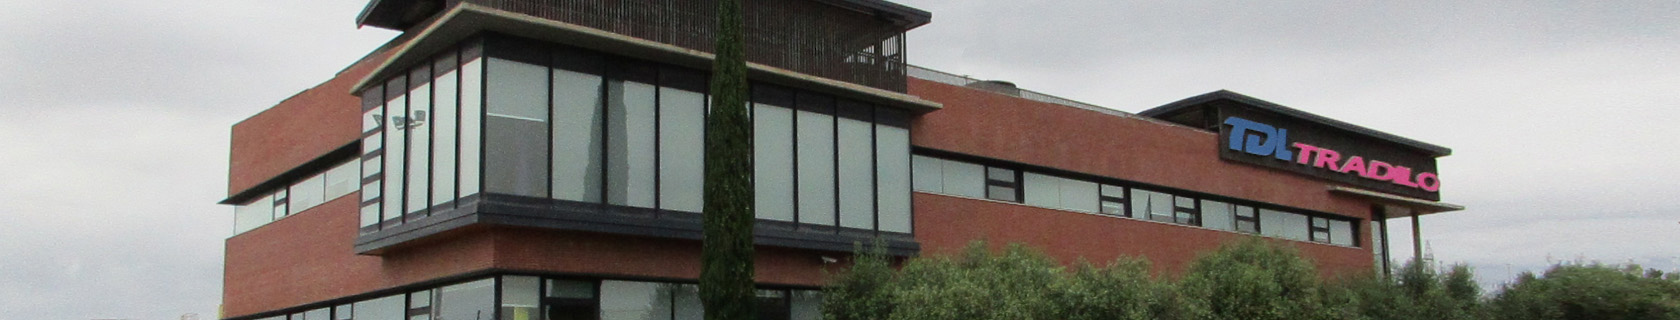 Tradilo headquarters front